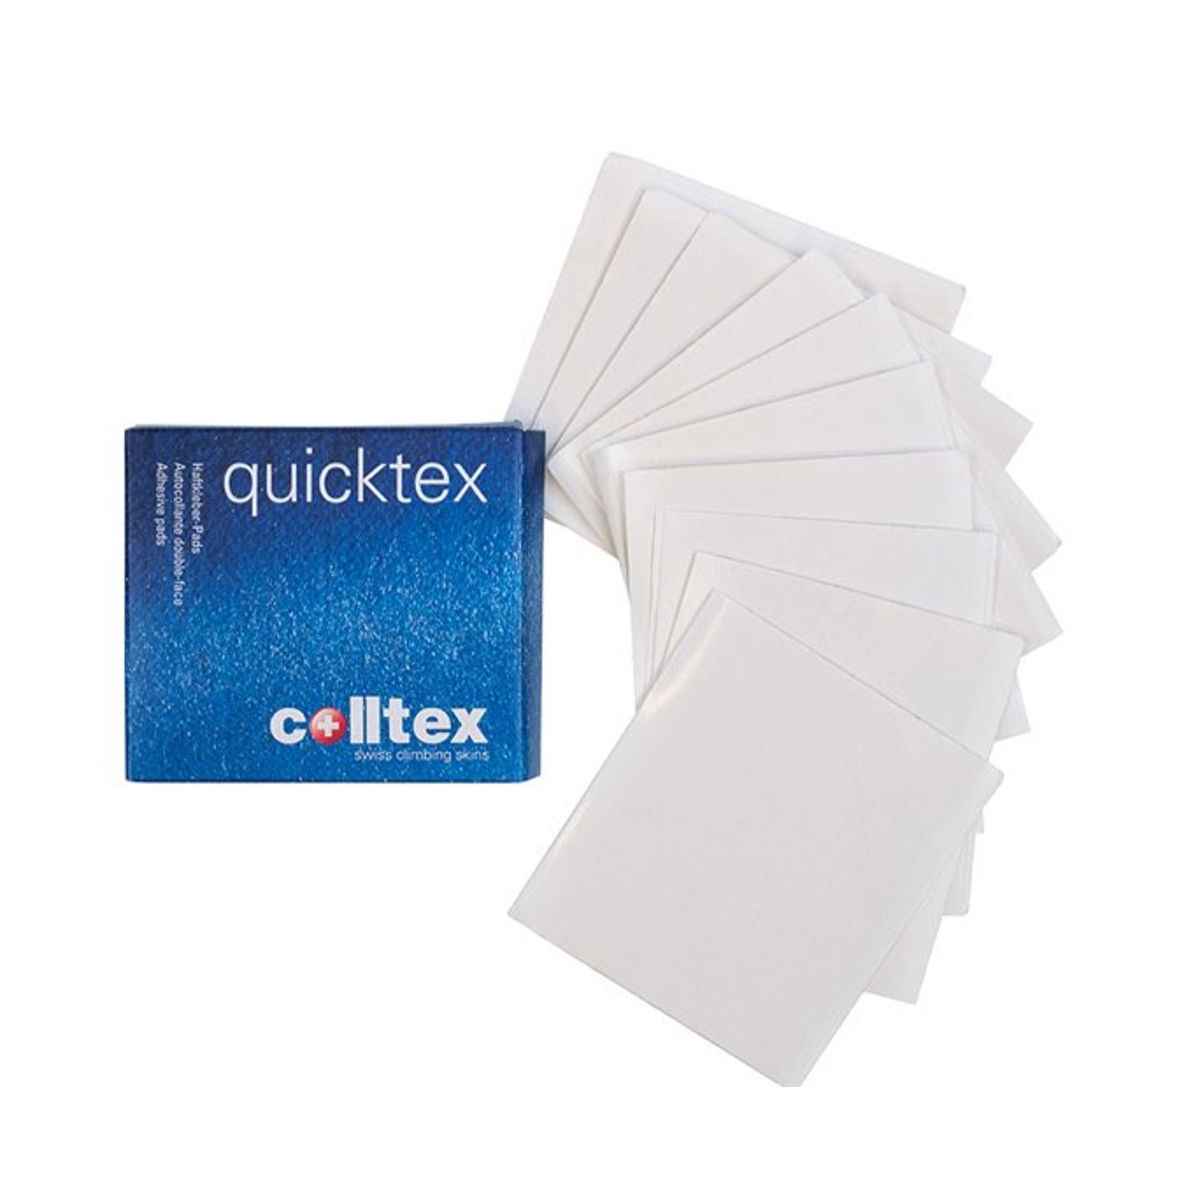 Lepidlo Colltex Quicktex Colltex 10013016 L-11